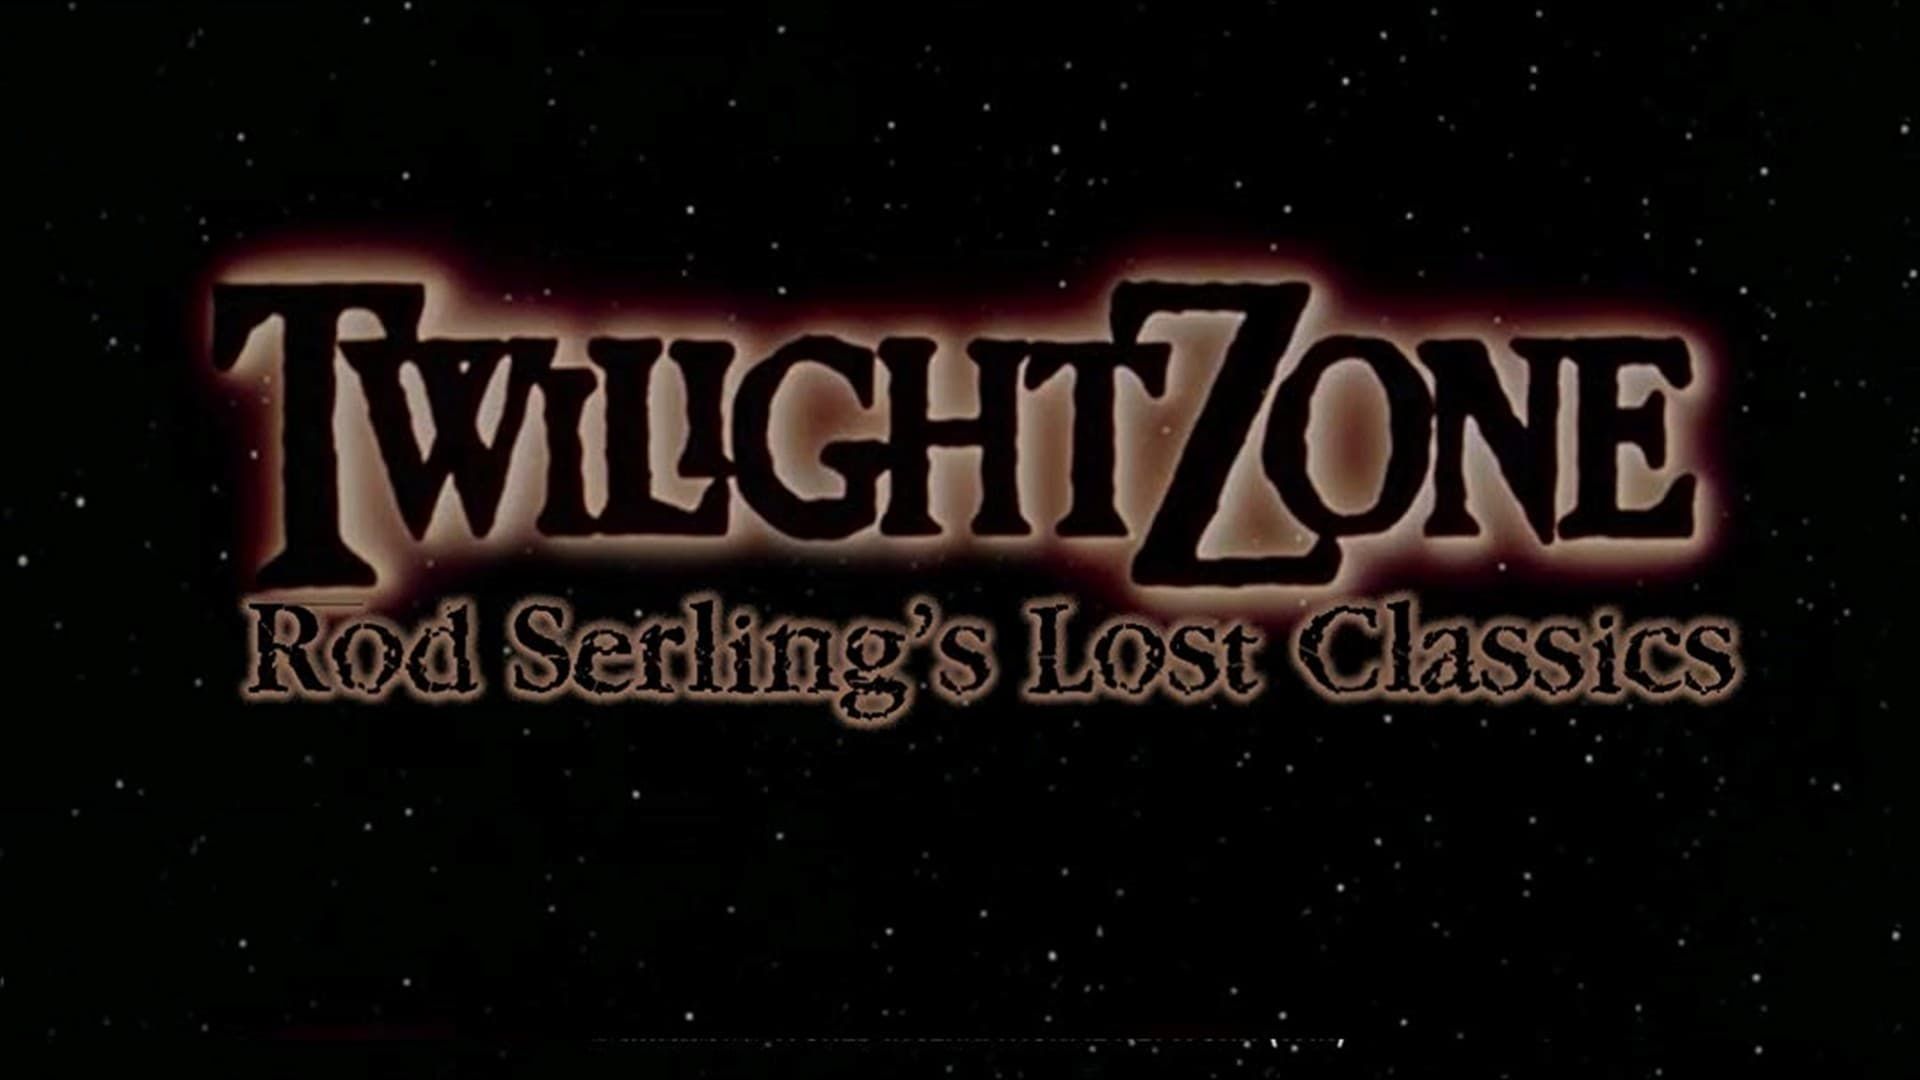 Twilight Zone: Rod Serling's Lost Classics background